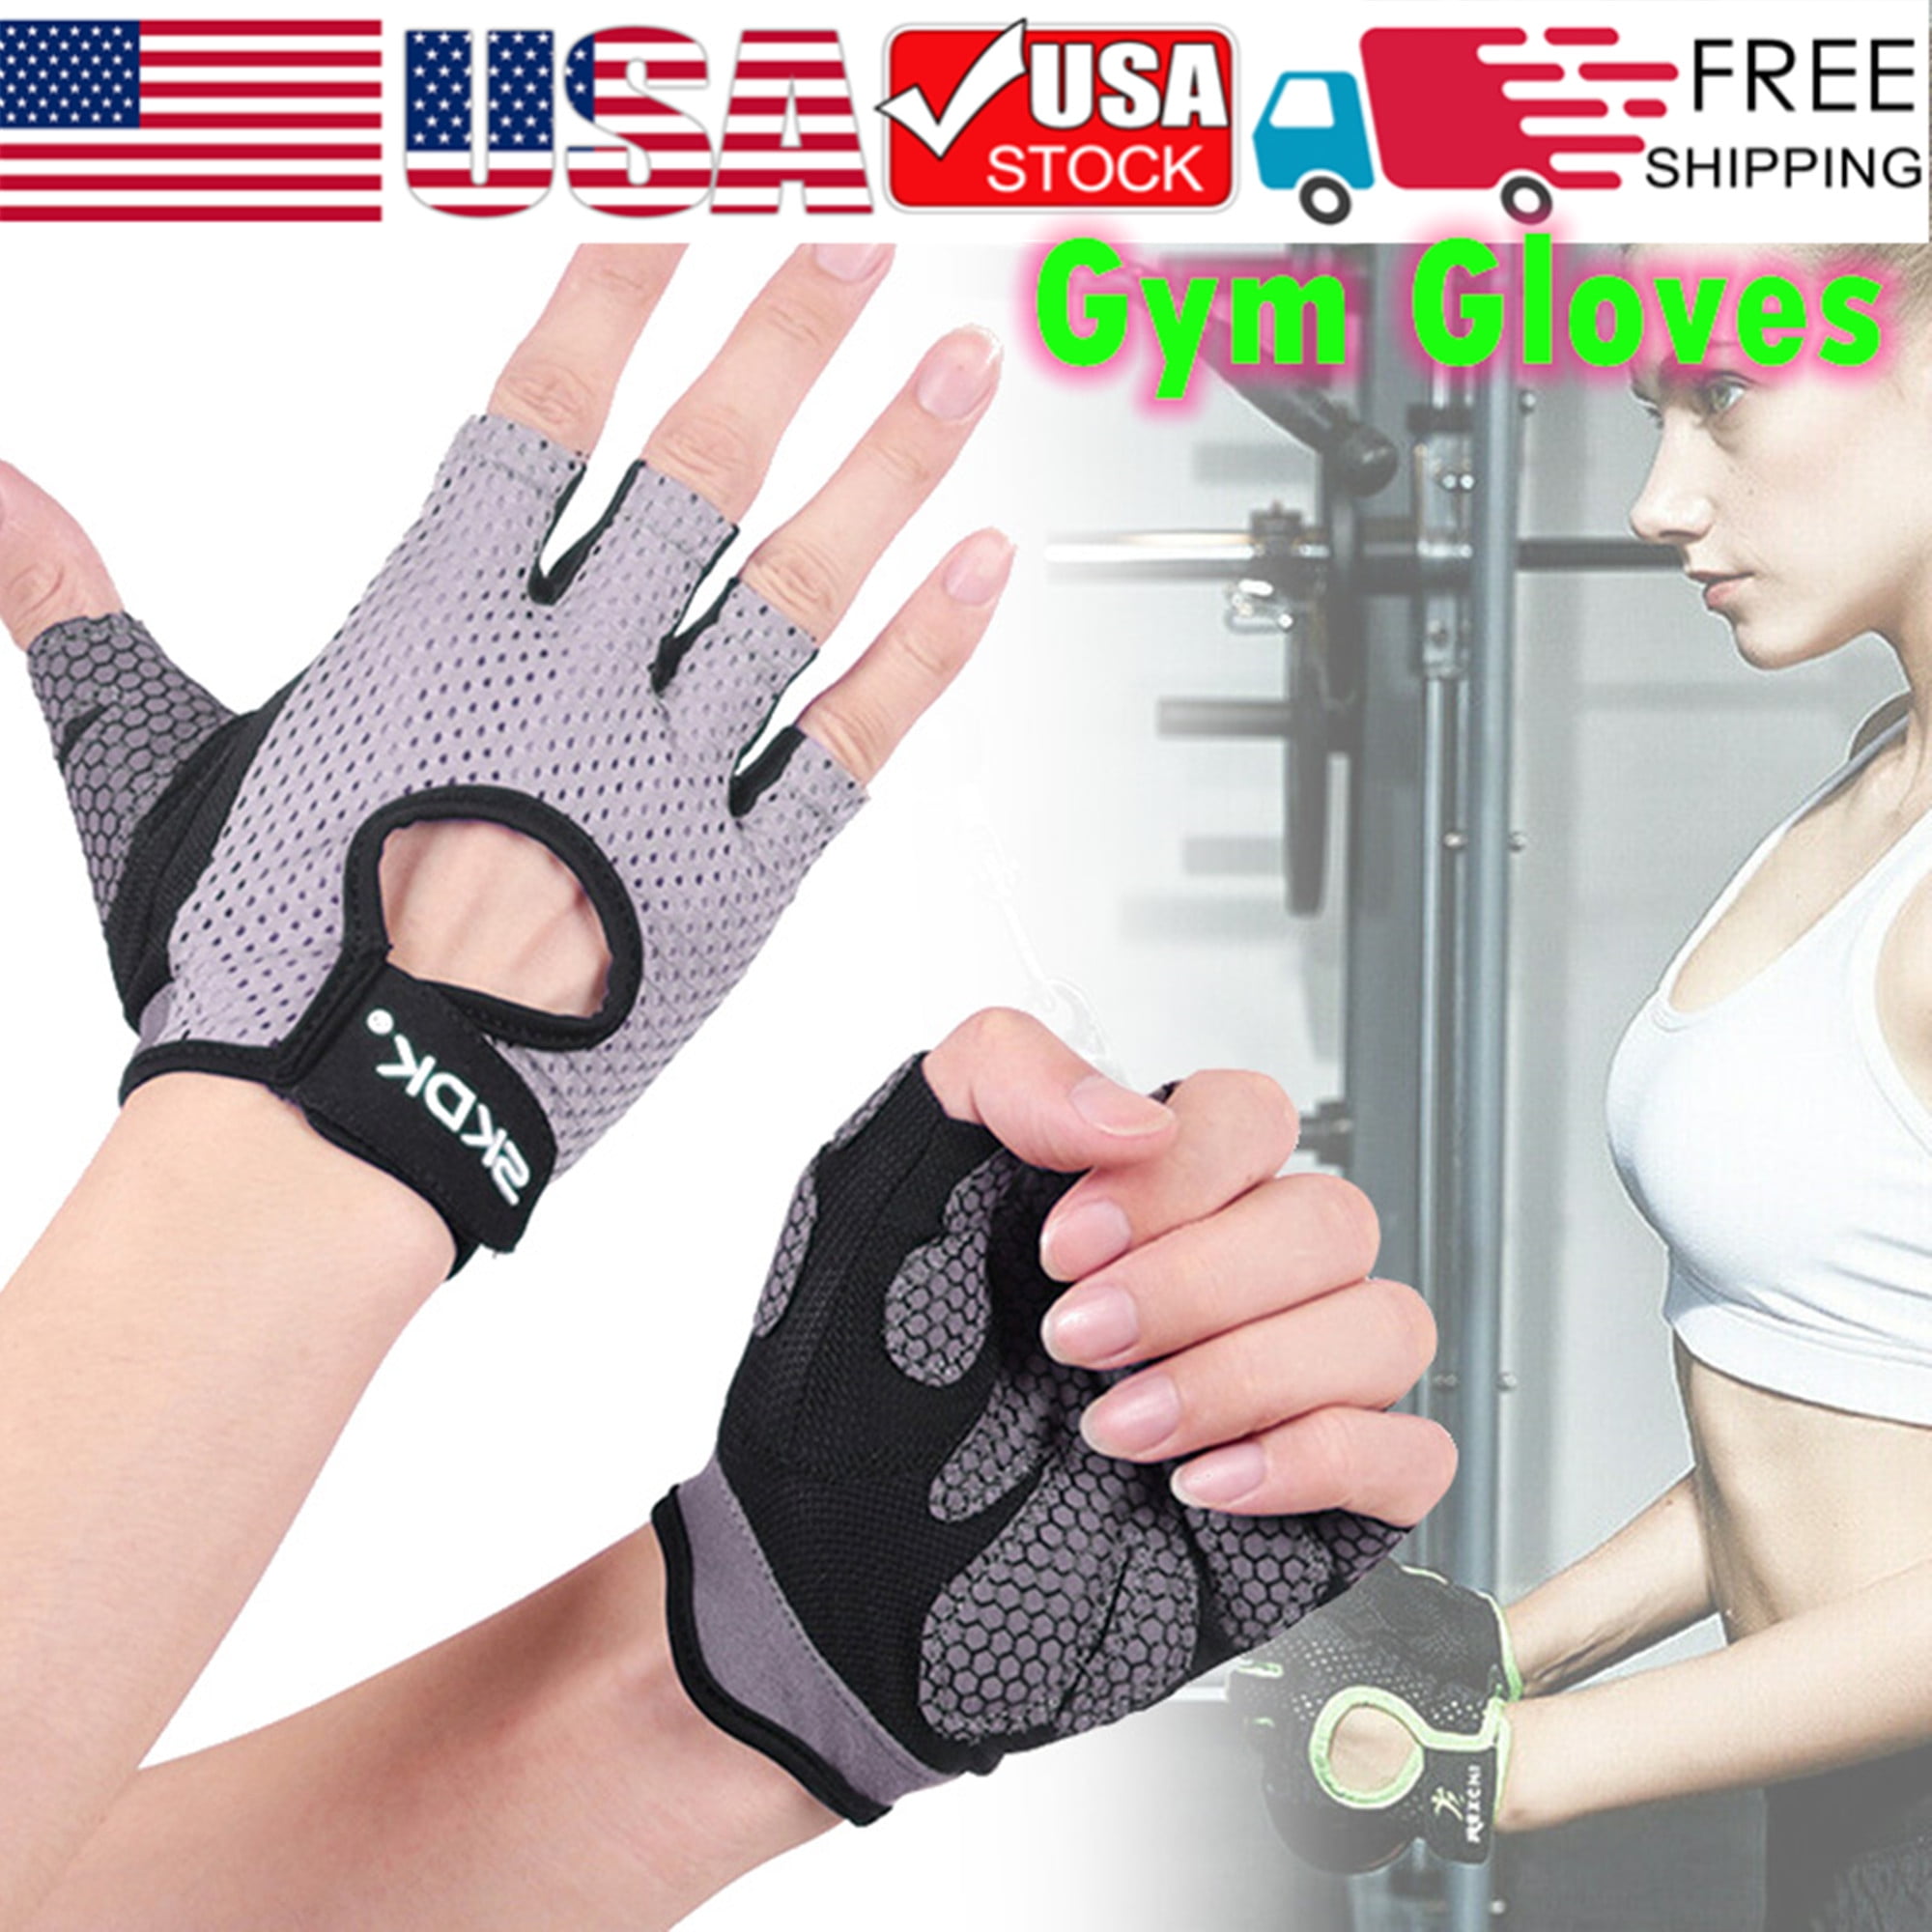 Details about   1 Pair Half Finger Sports Fitness Anti-slip Resistance Weightlifting Glov.AU 